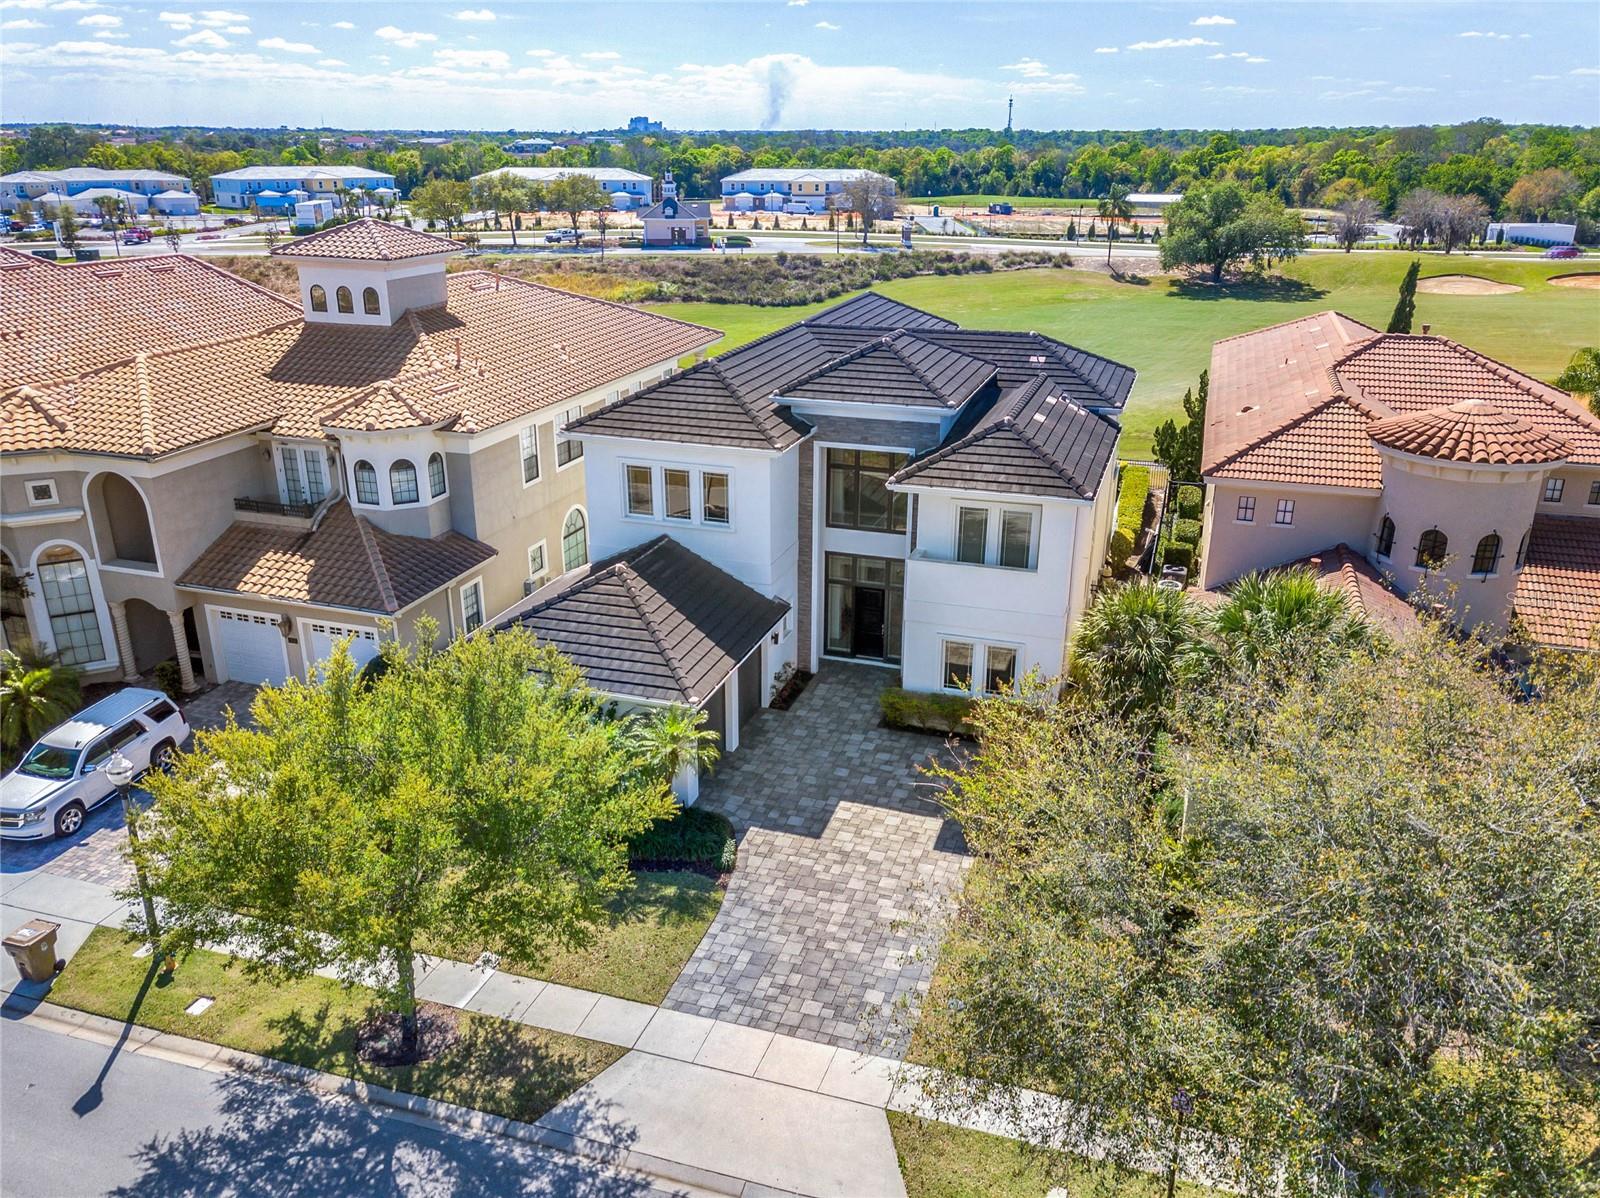 Slide show image of the Orlando Florida Home for Sale 61